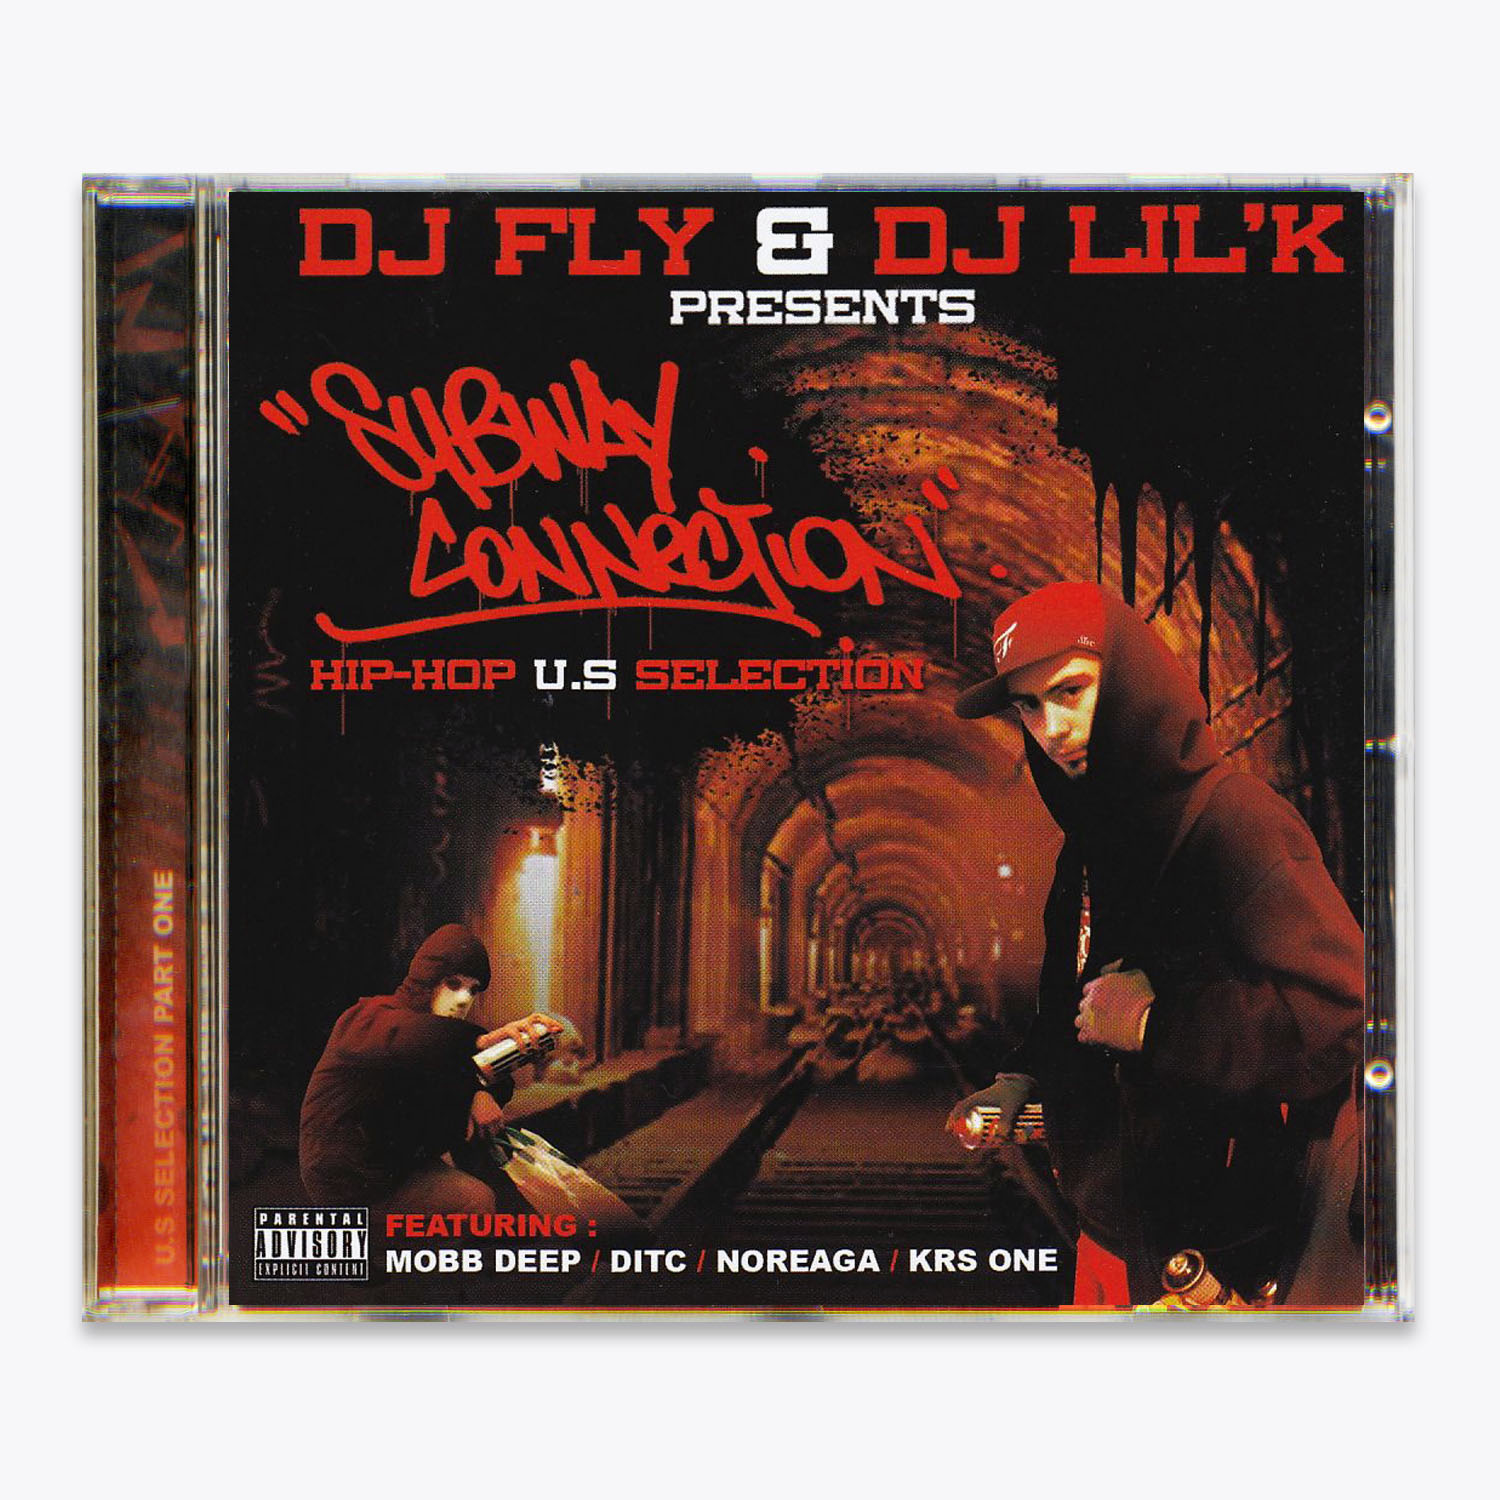 Dj-Fly-DJ-Lil-K-Subway-Connection-2006